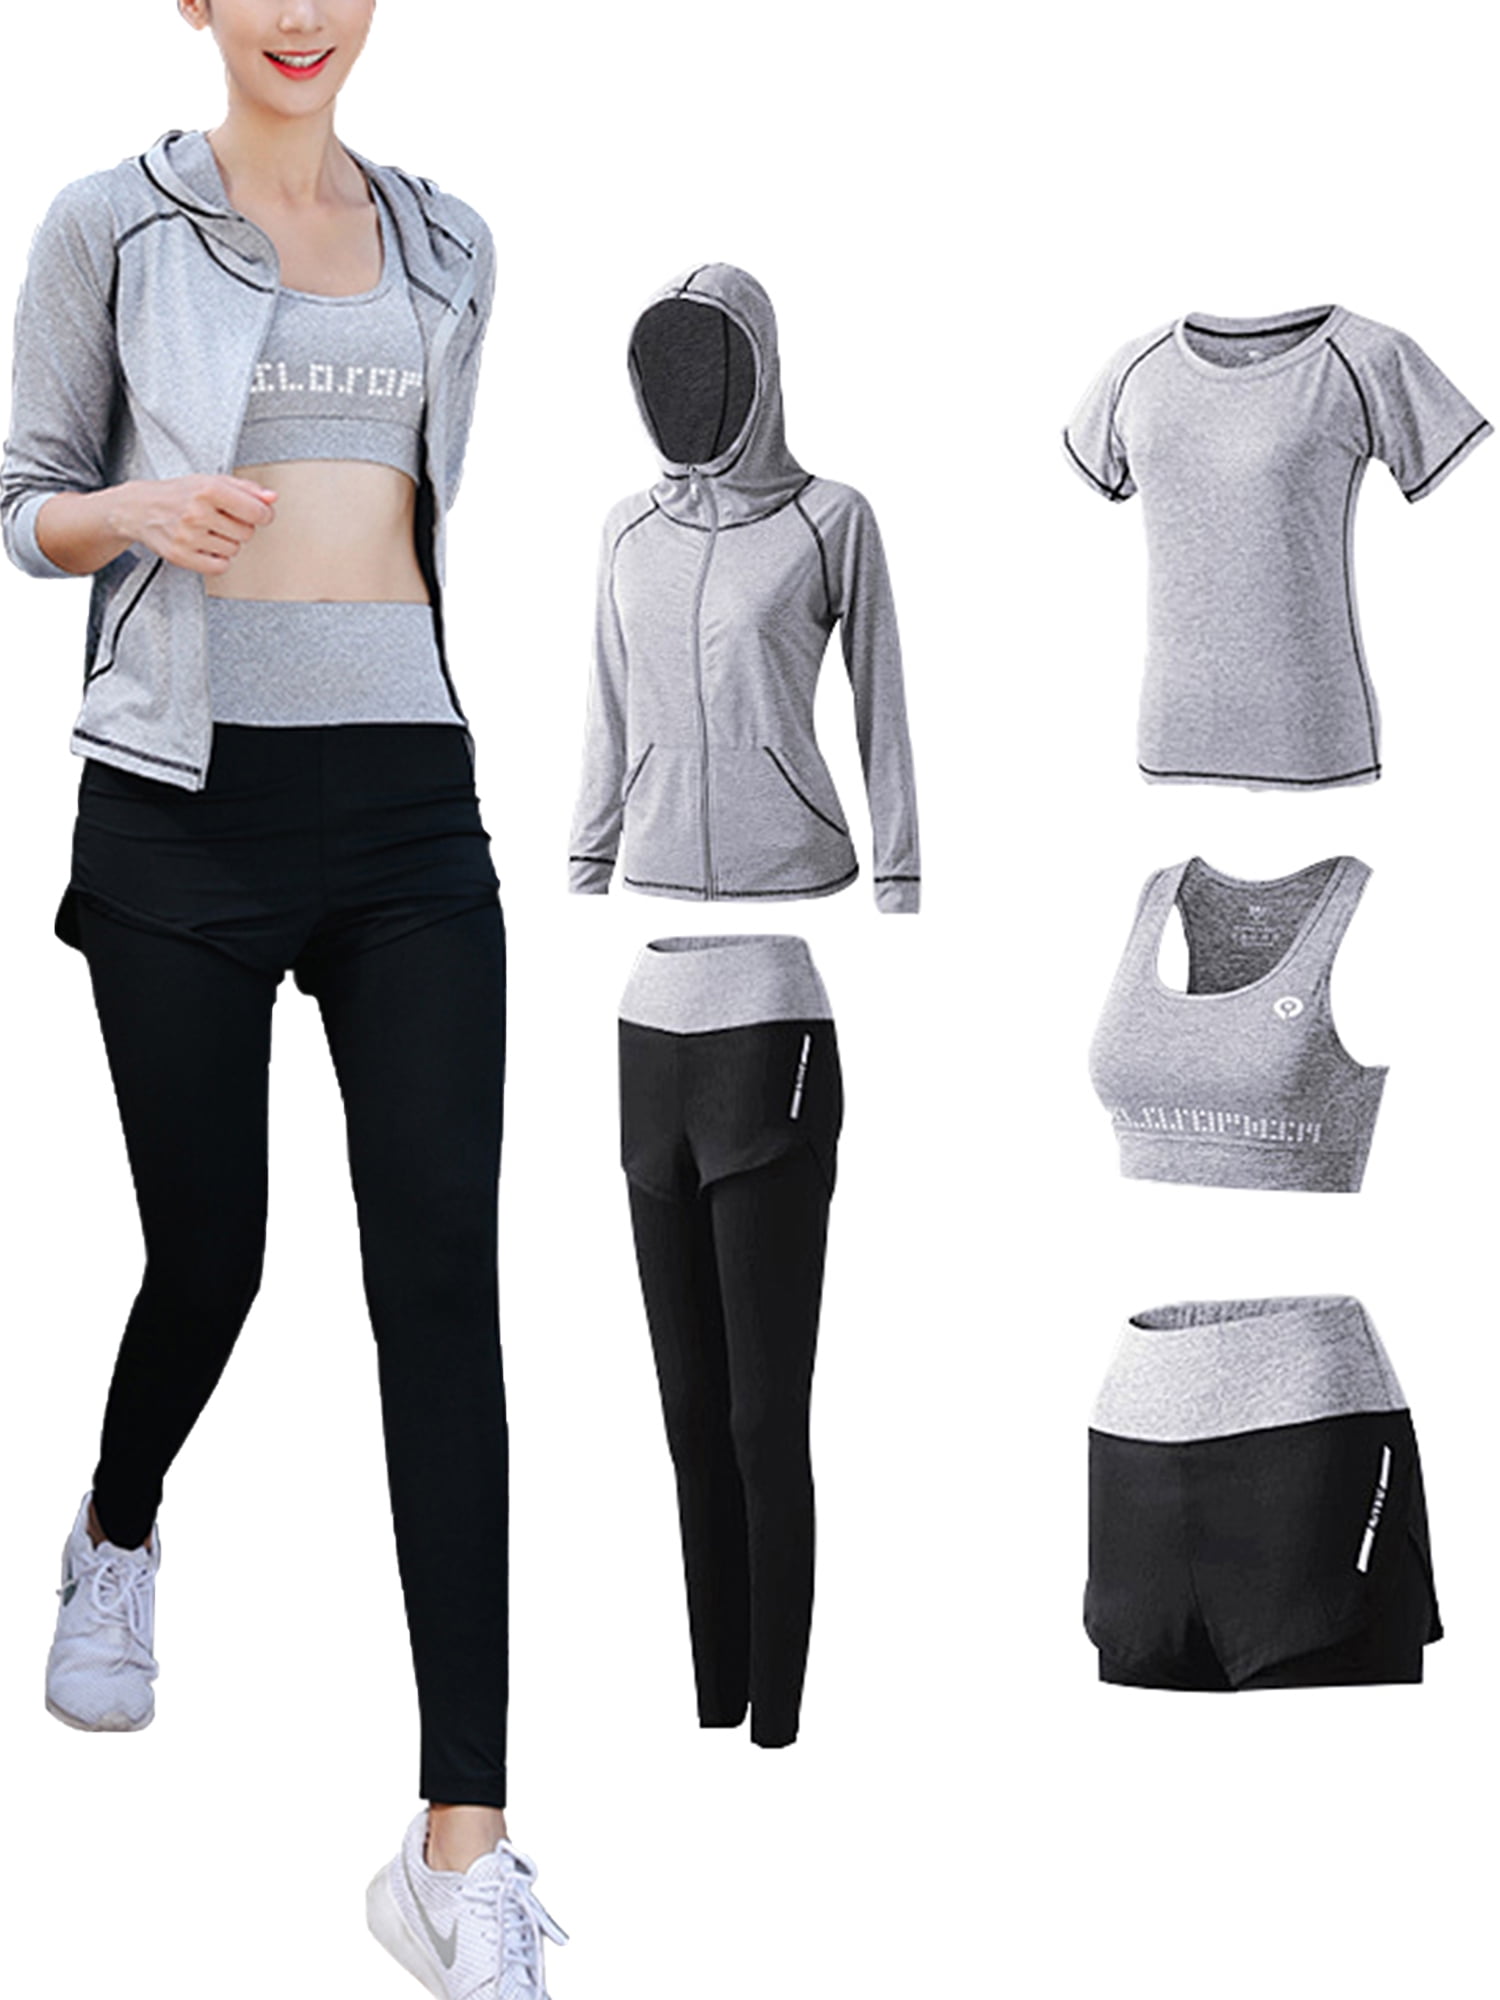 Mallimoda Women's 5pcs Sport Suits Yoga Athletic Clothing Set Jogging Tracksuits